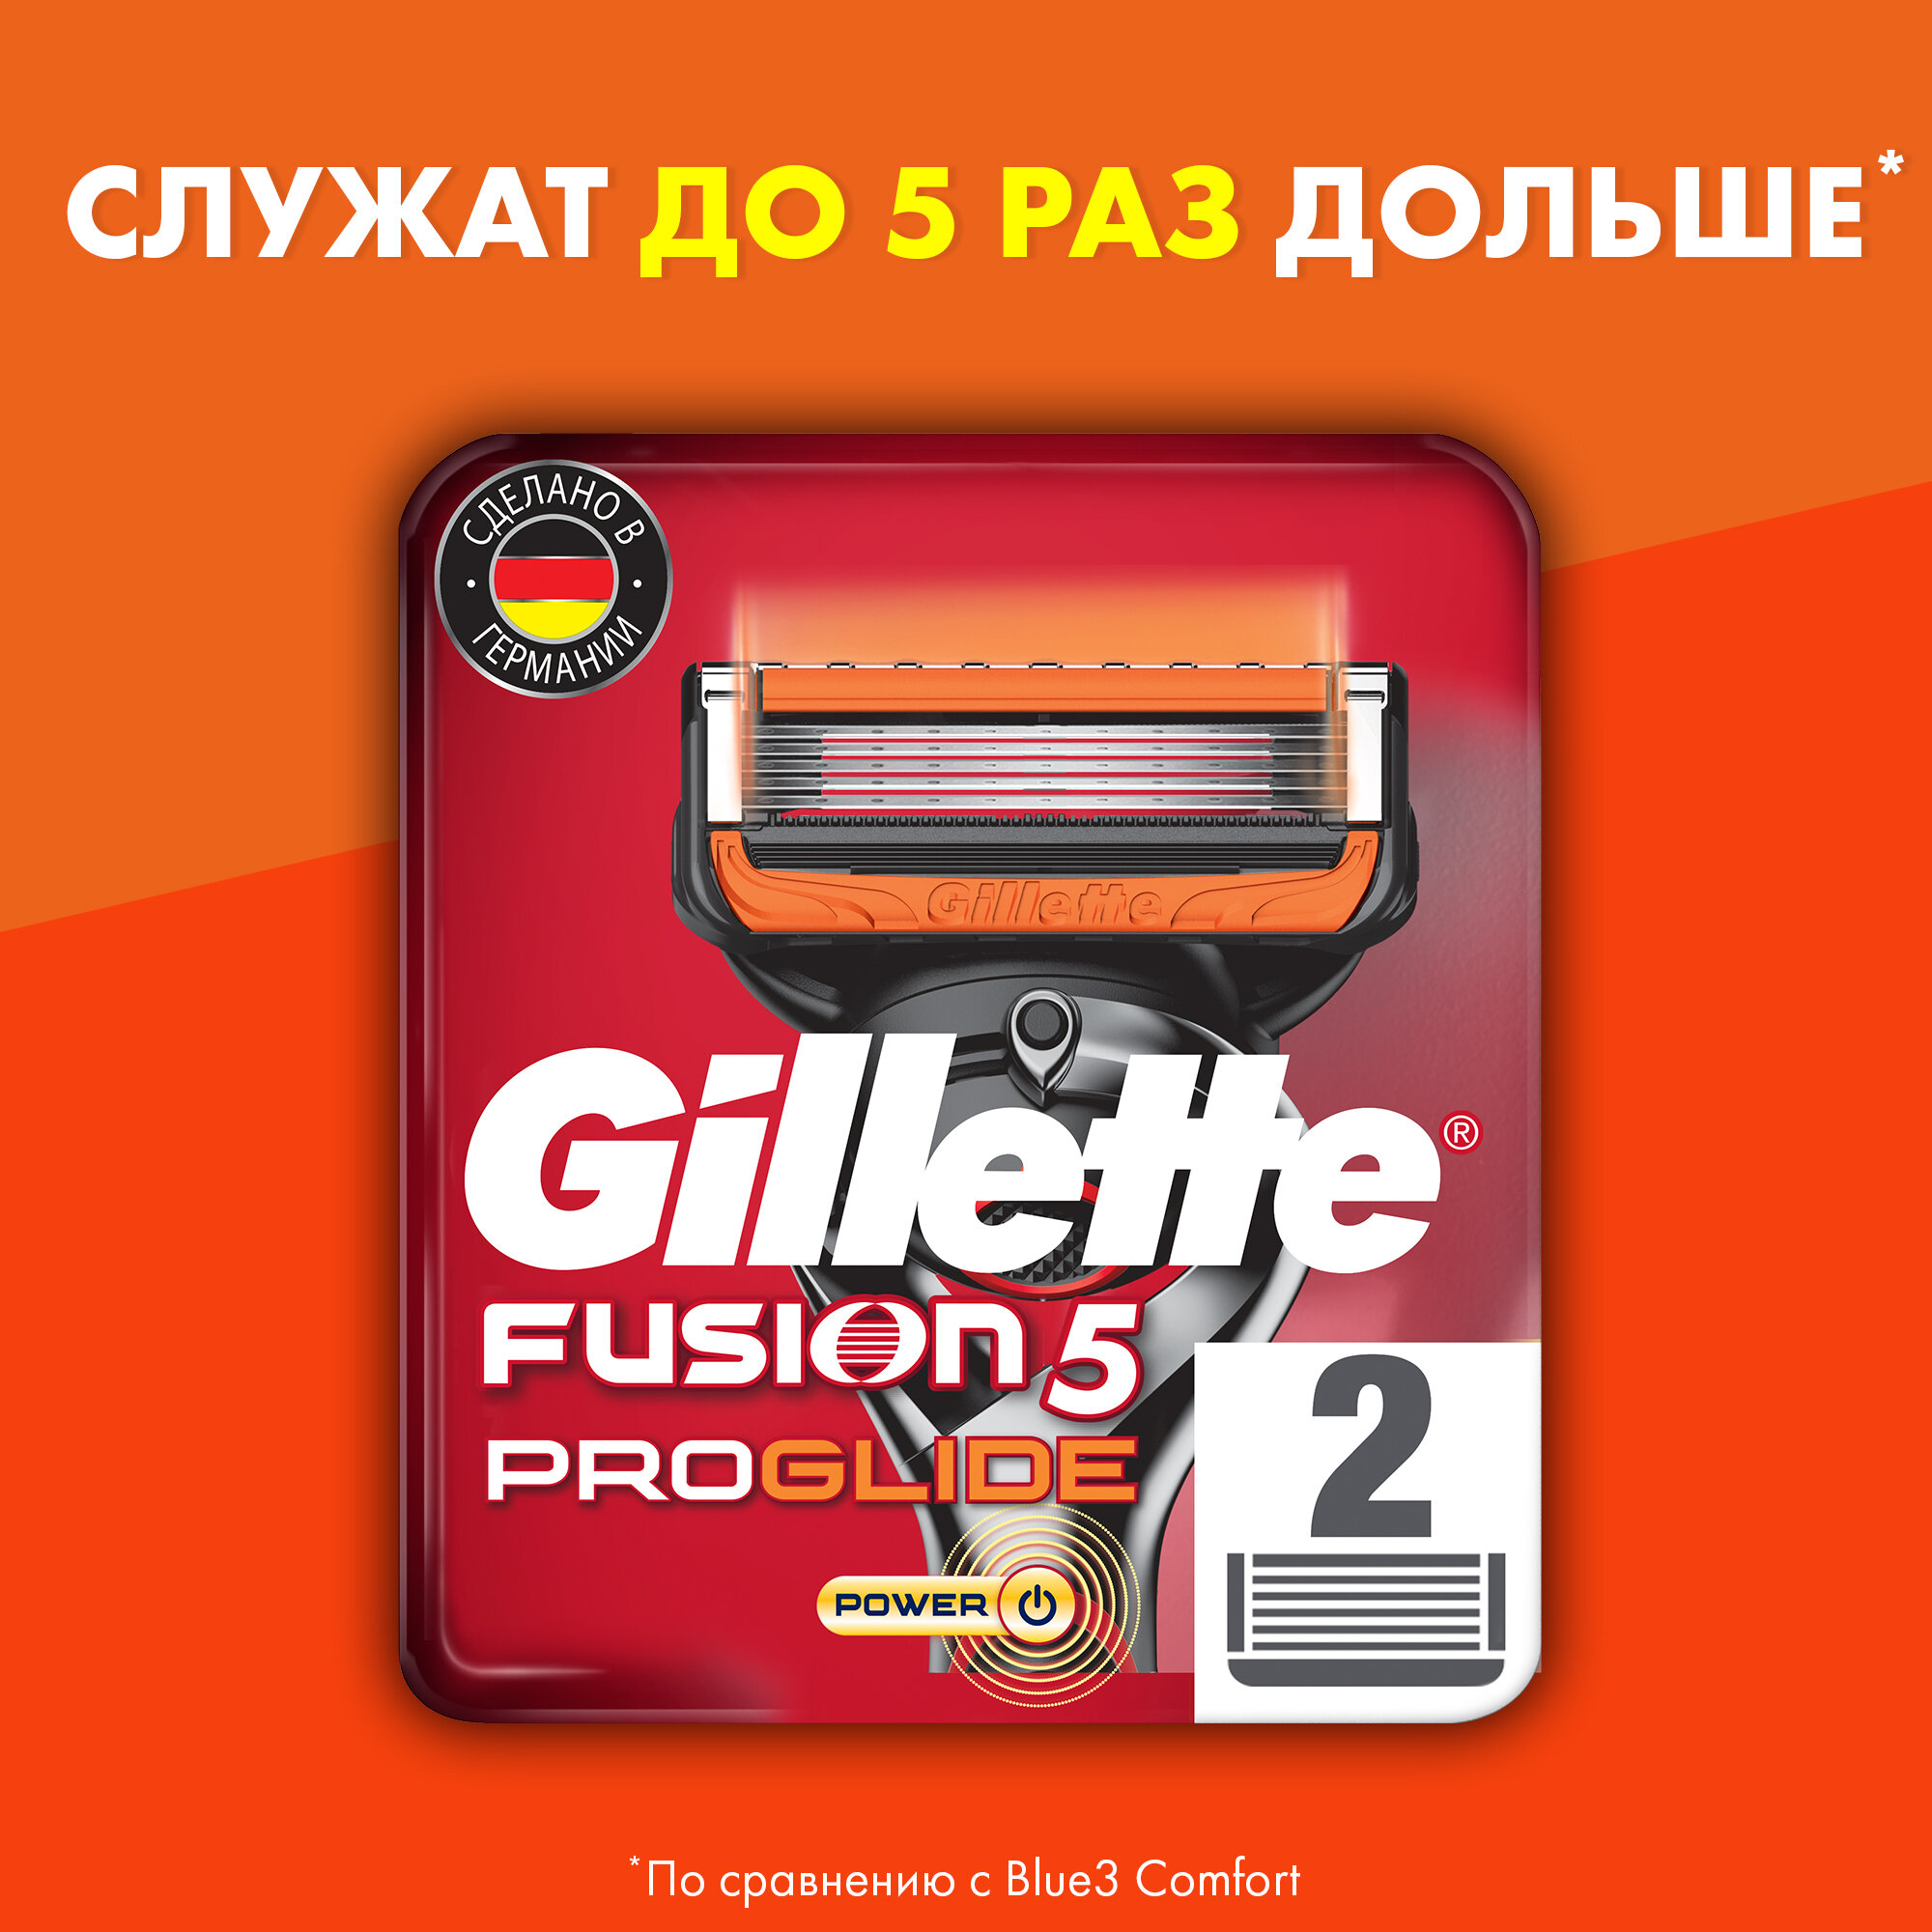 кассеты GILLETTE Fusion Pro Glide Power 4шт - фото №1